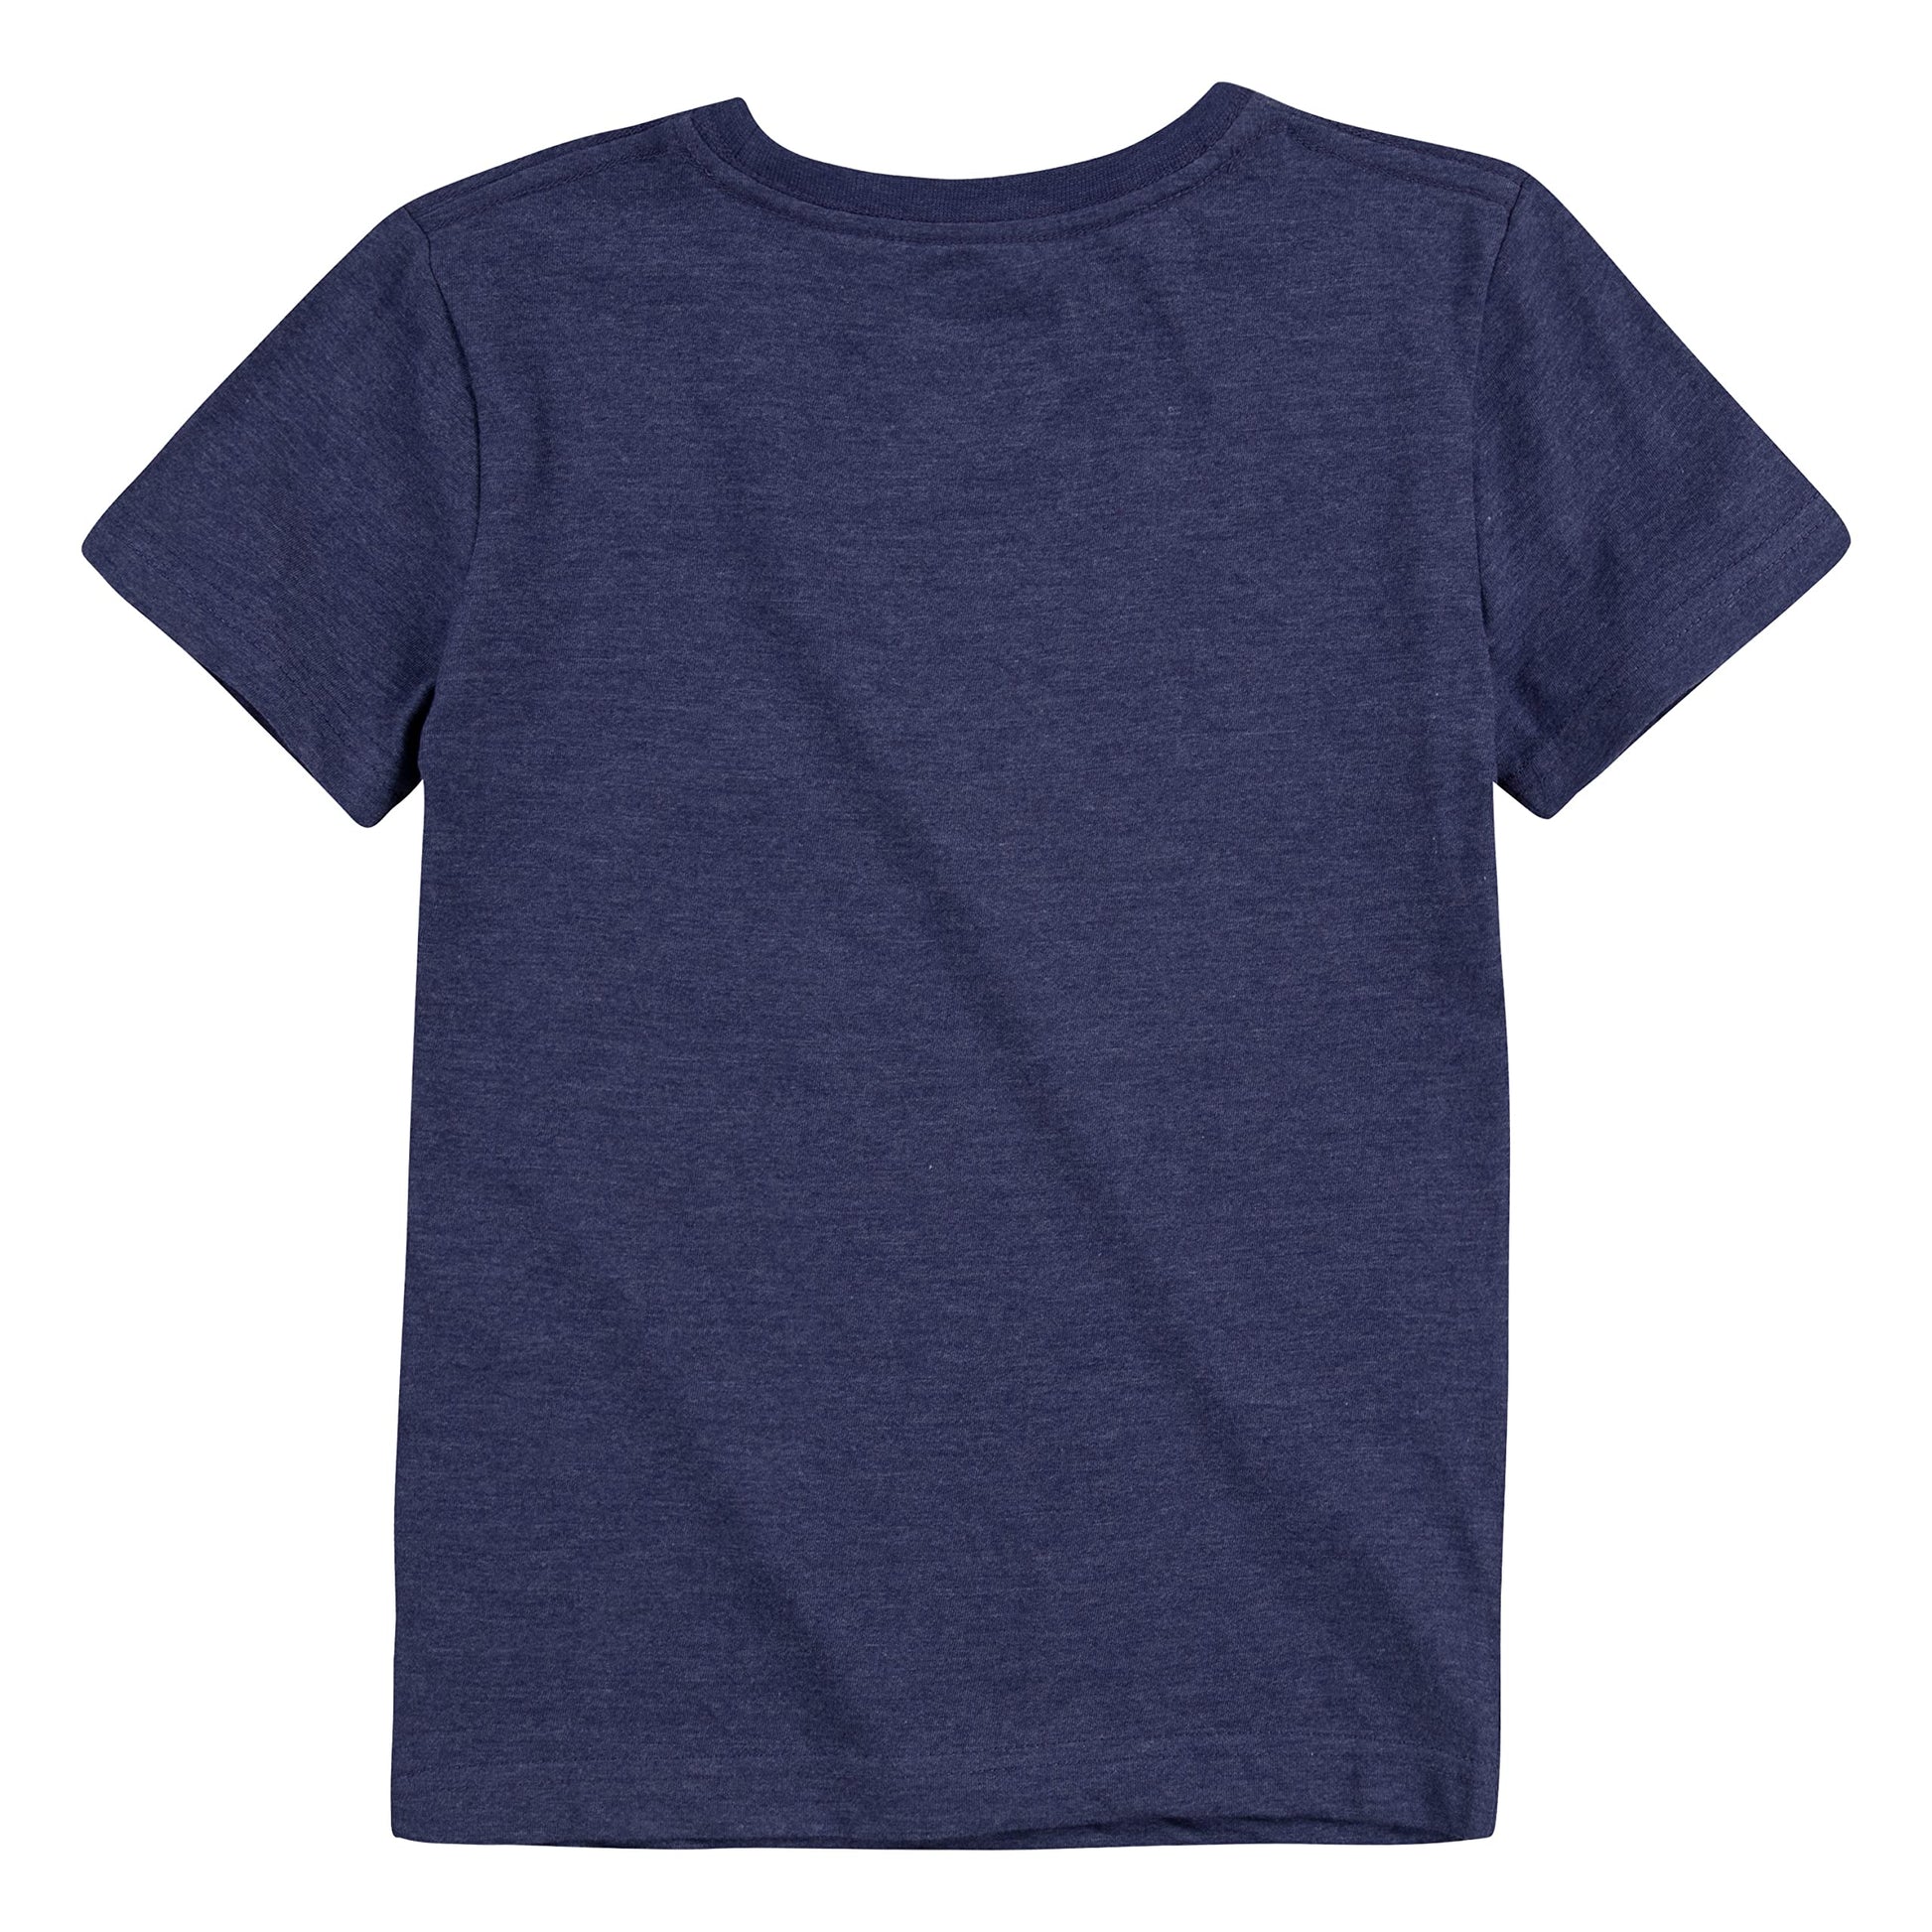 Image 2 of Short Sleeve Graphic Tee Shirt (Little Kids)